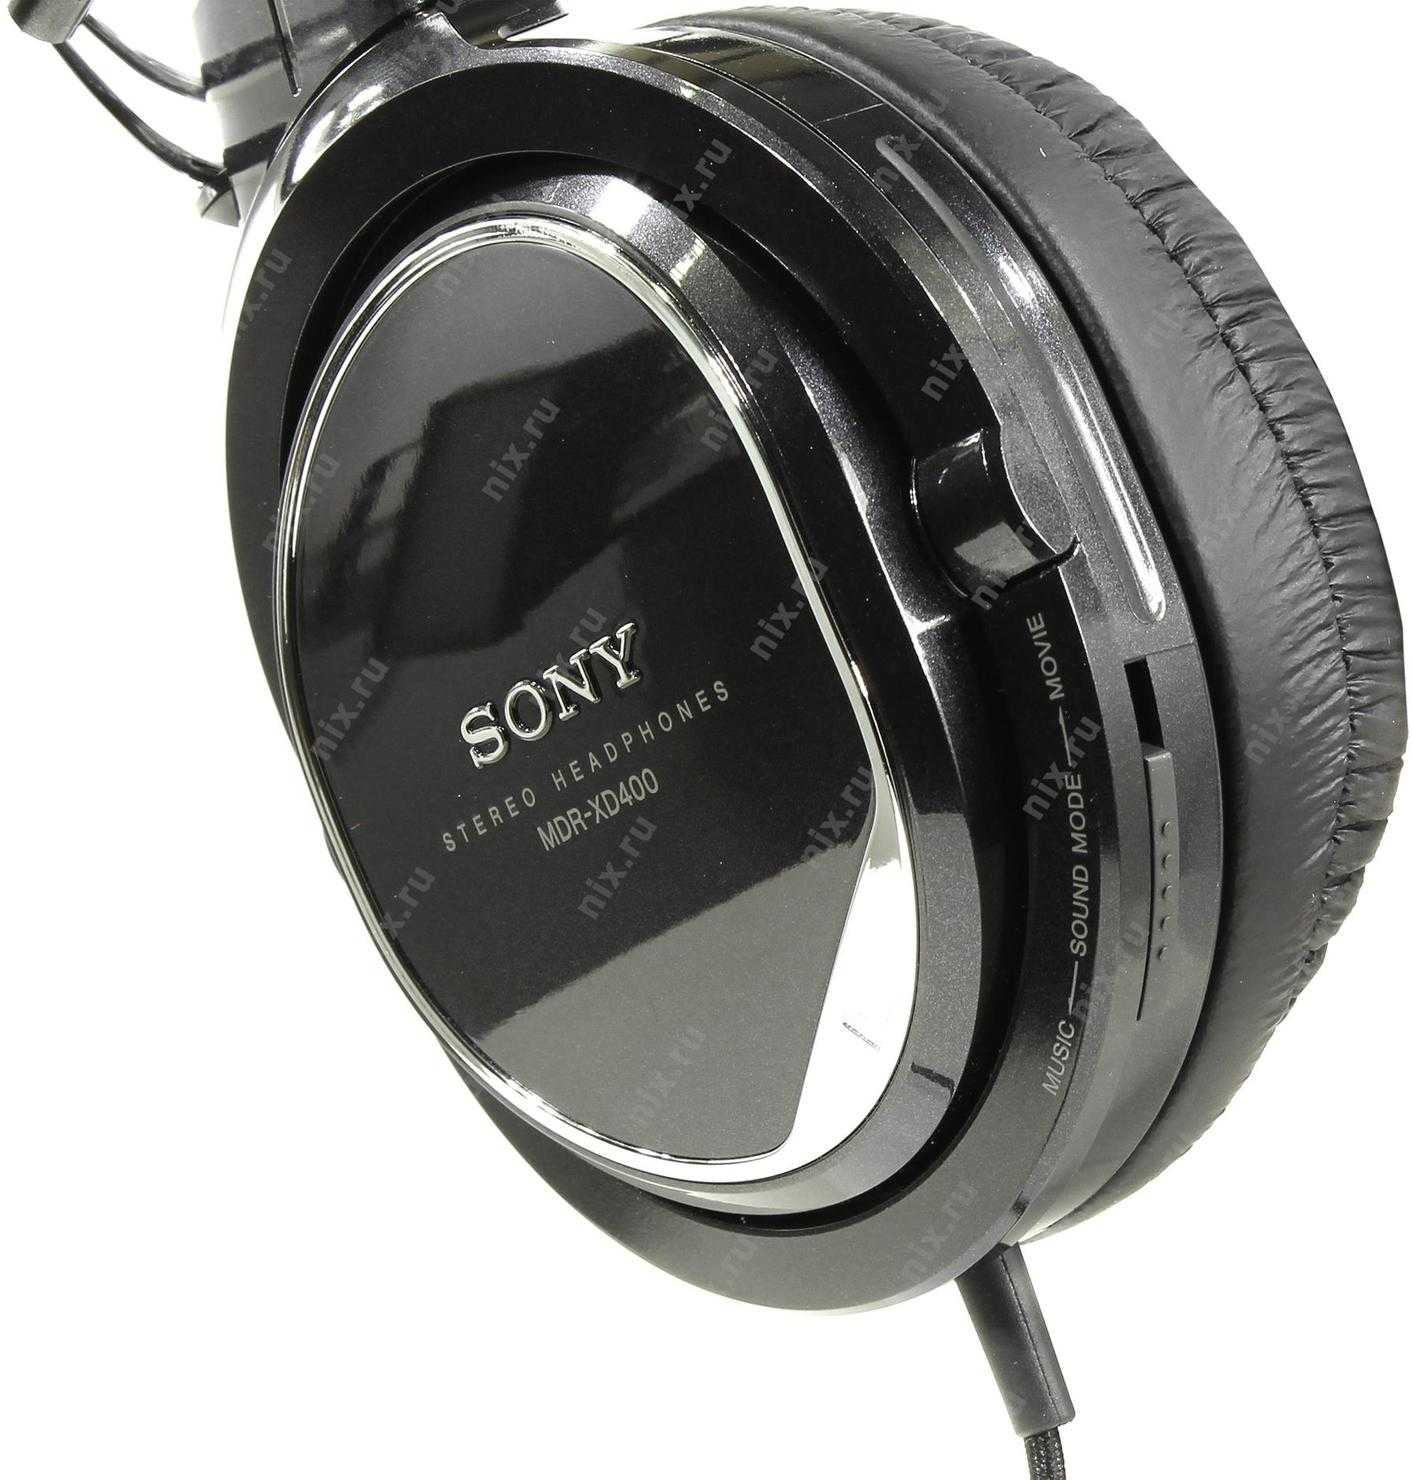 Sony mdr-xd400